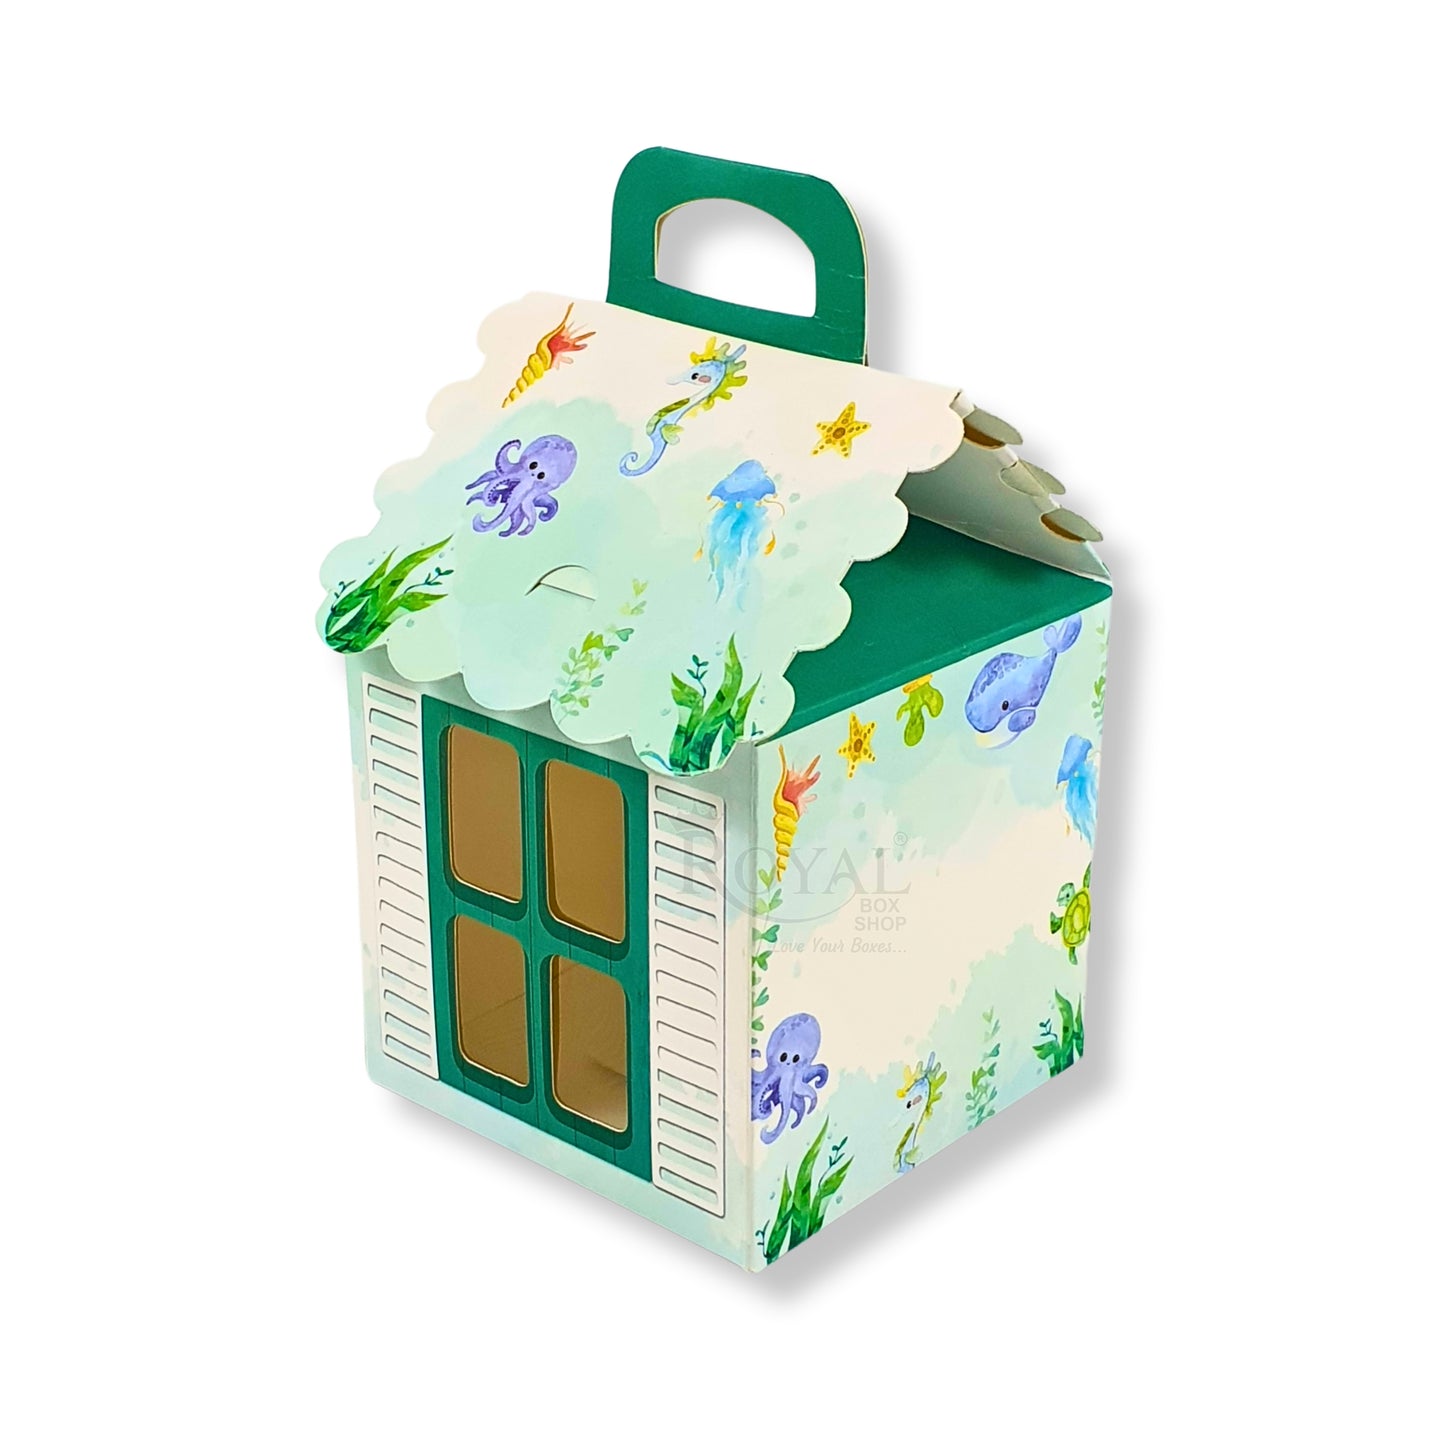 Hut Shape Gift Boxes  I 4x4x4 Inch I Aqua Sea Theme I Perfect For Birthday, Return Favor, Baby Announcements